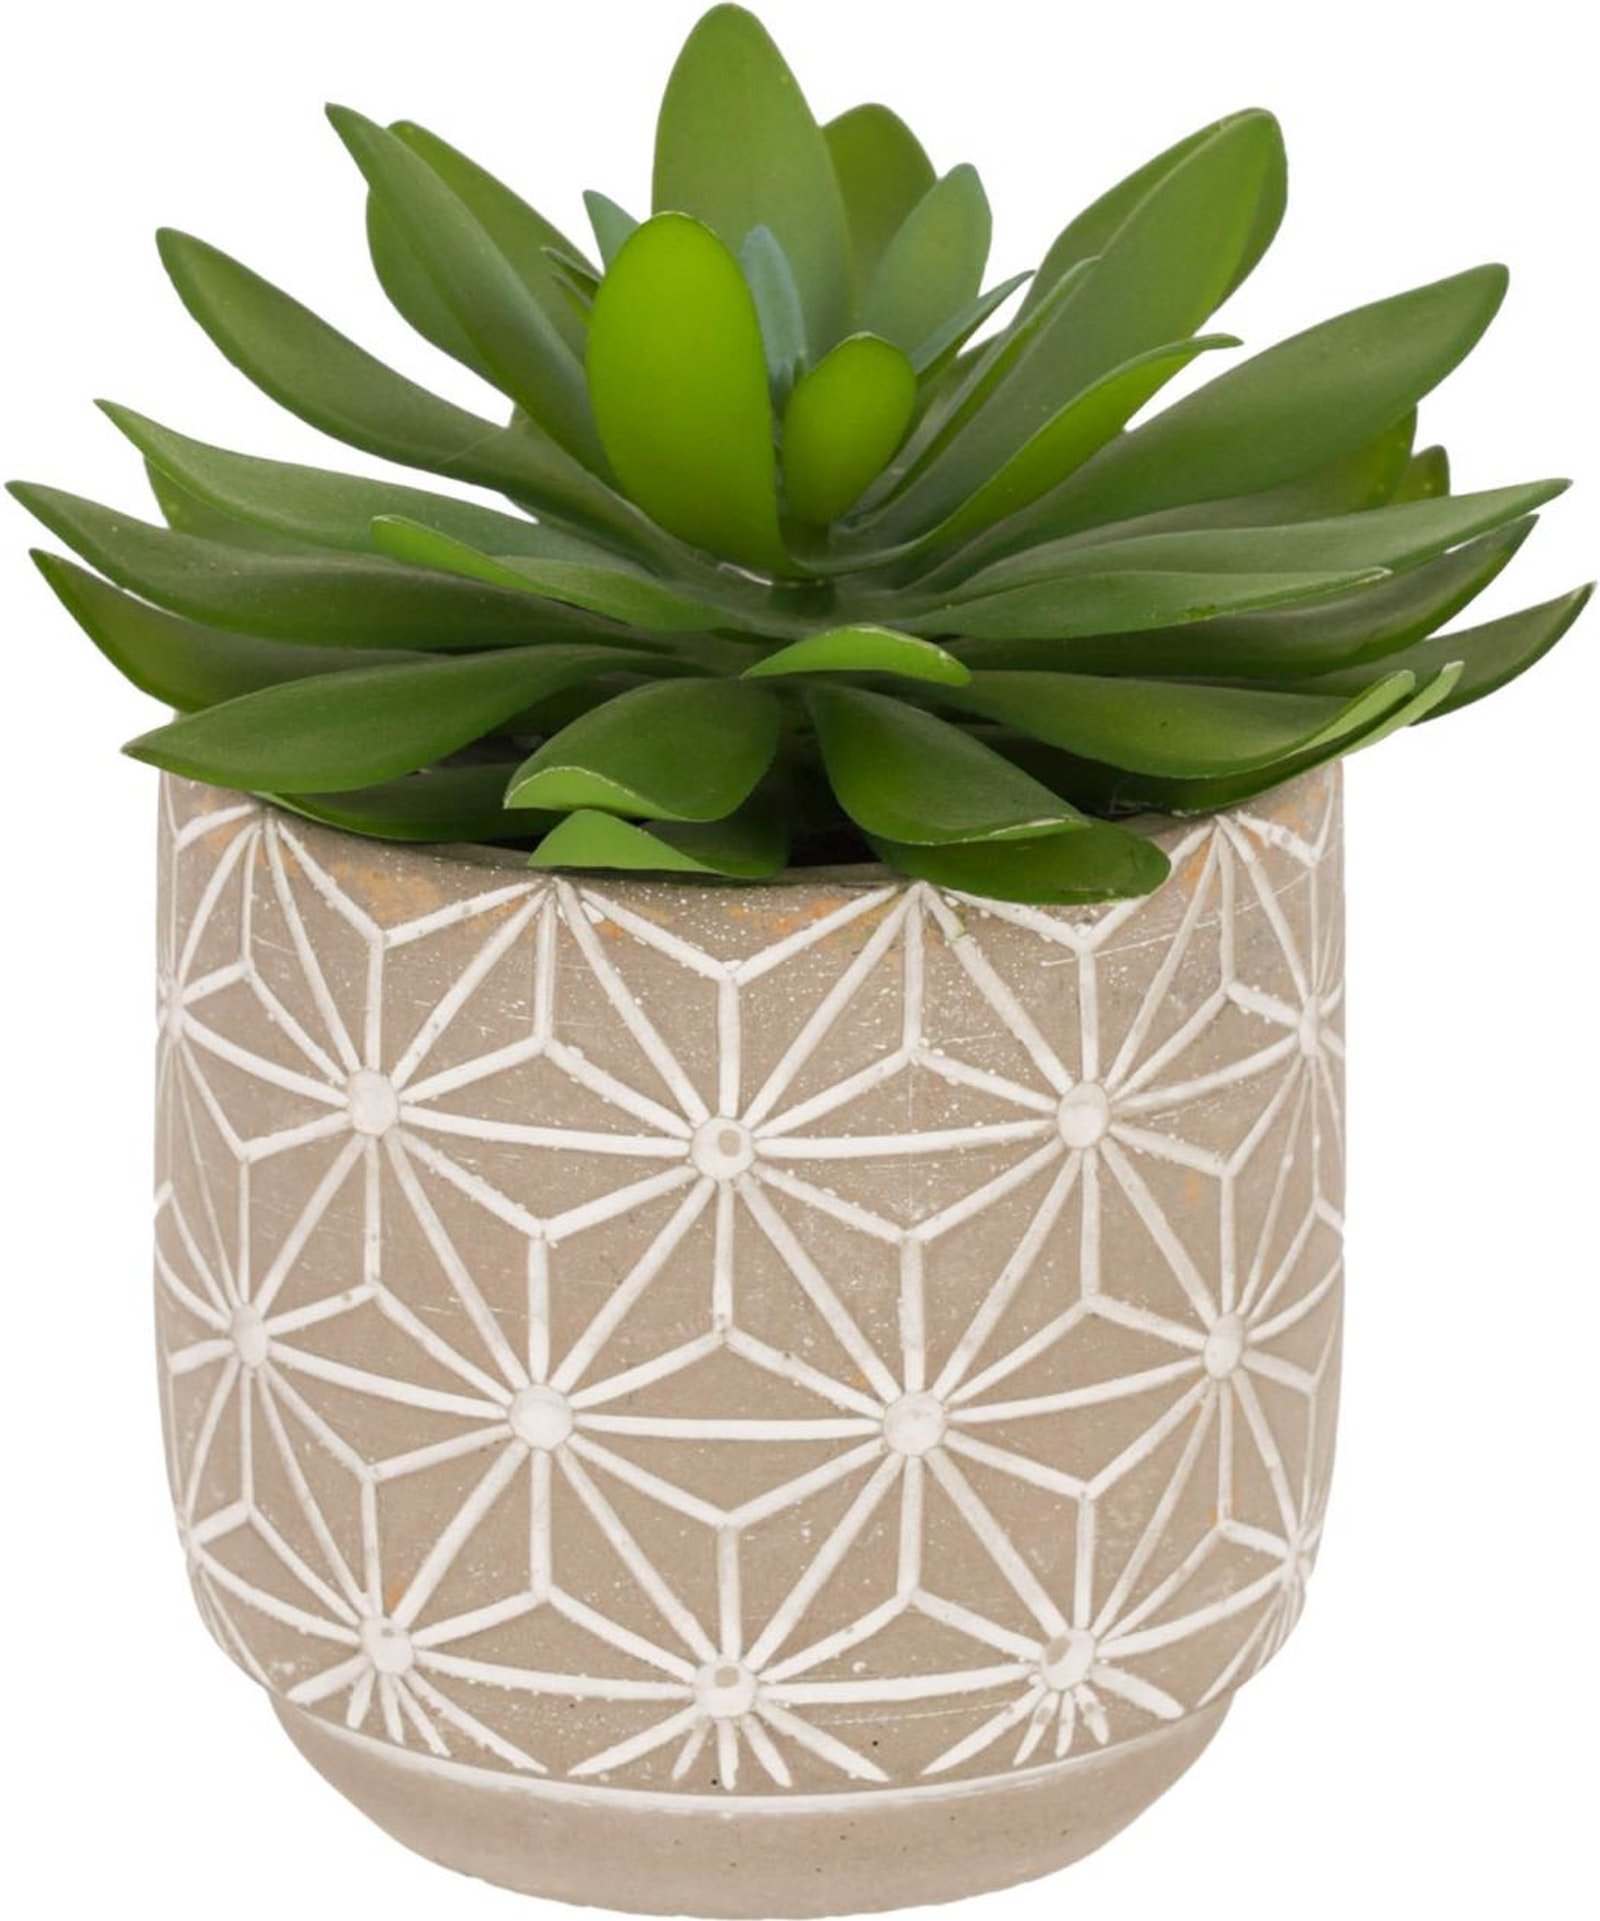 Cactus, Kunstig plante, moderne, plast by LaForma (H: 17 cm. B: 14 cm. L: 14 cm., Grøn/Grå)